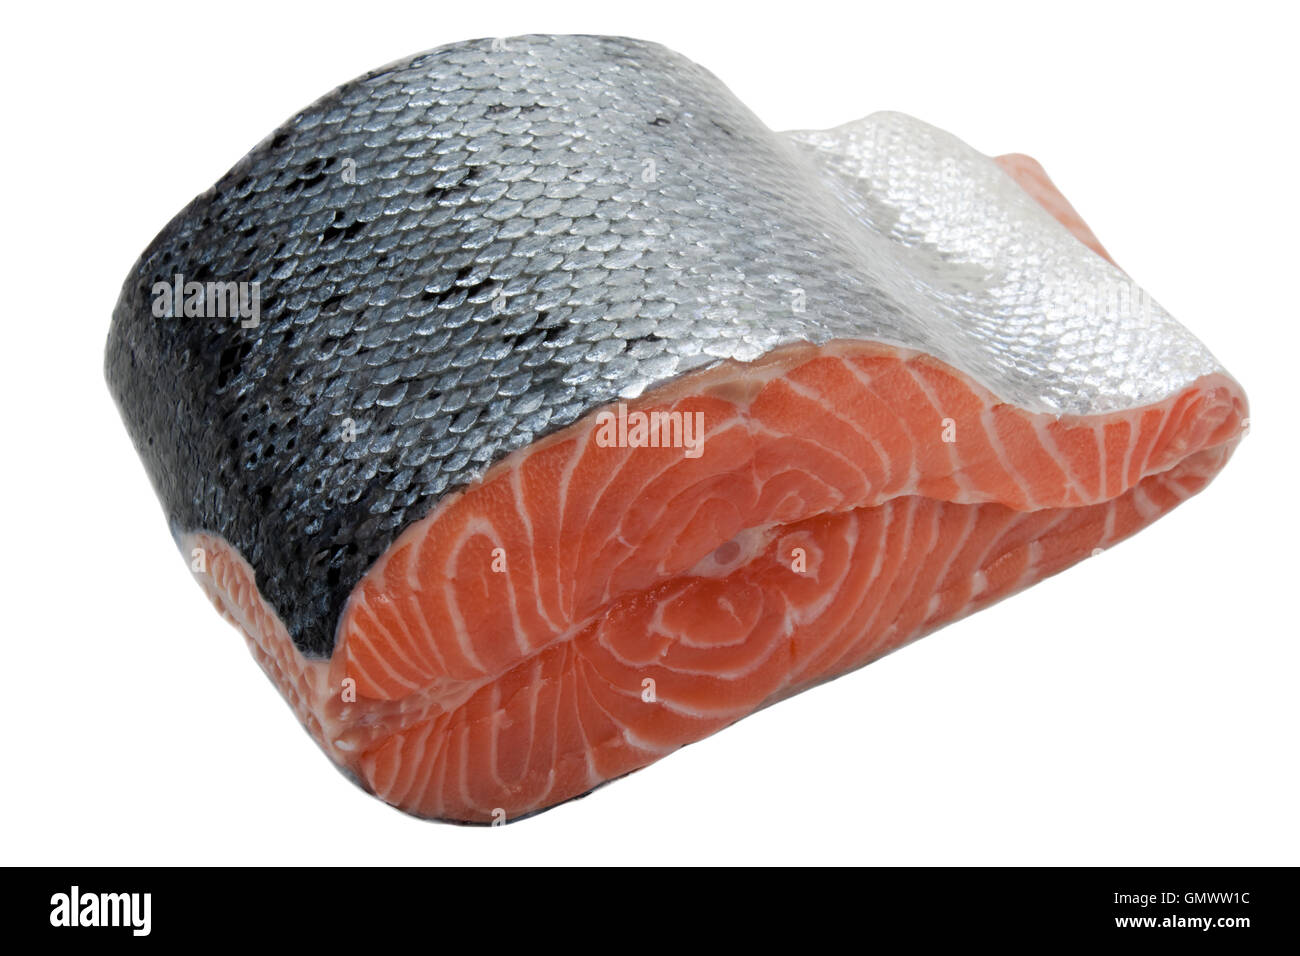 https://c8.alamy.com/comp/GMWW1C/salmon-fish-GMWW1C.jpg